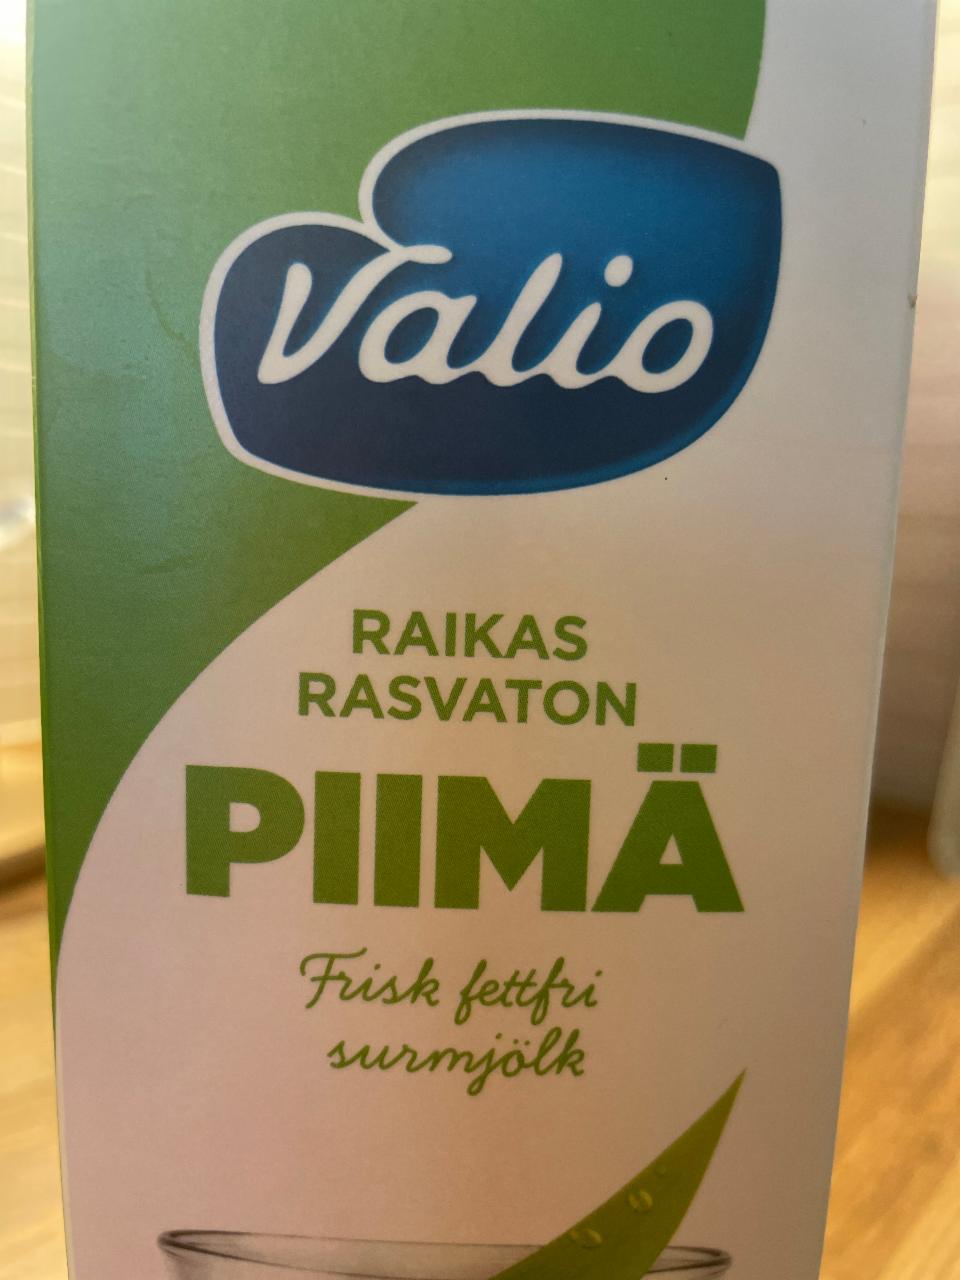 Фото - питьевой йогурт Piimä Valio